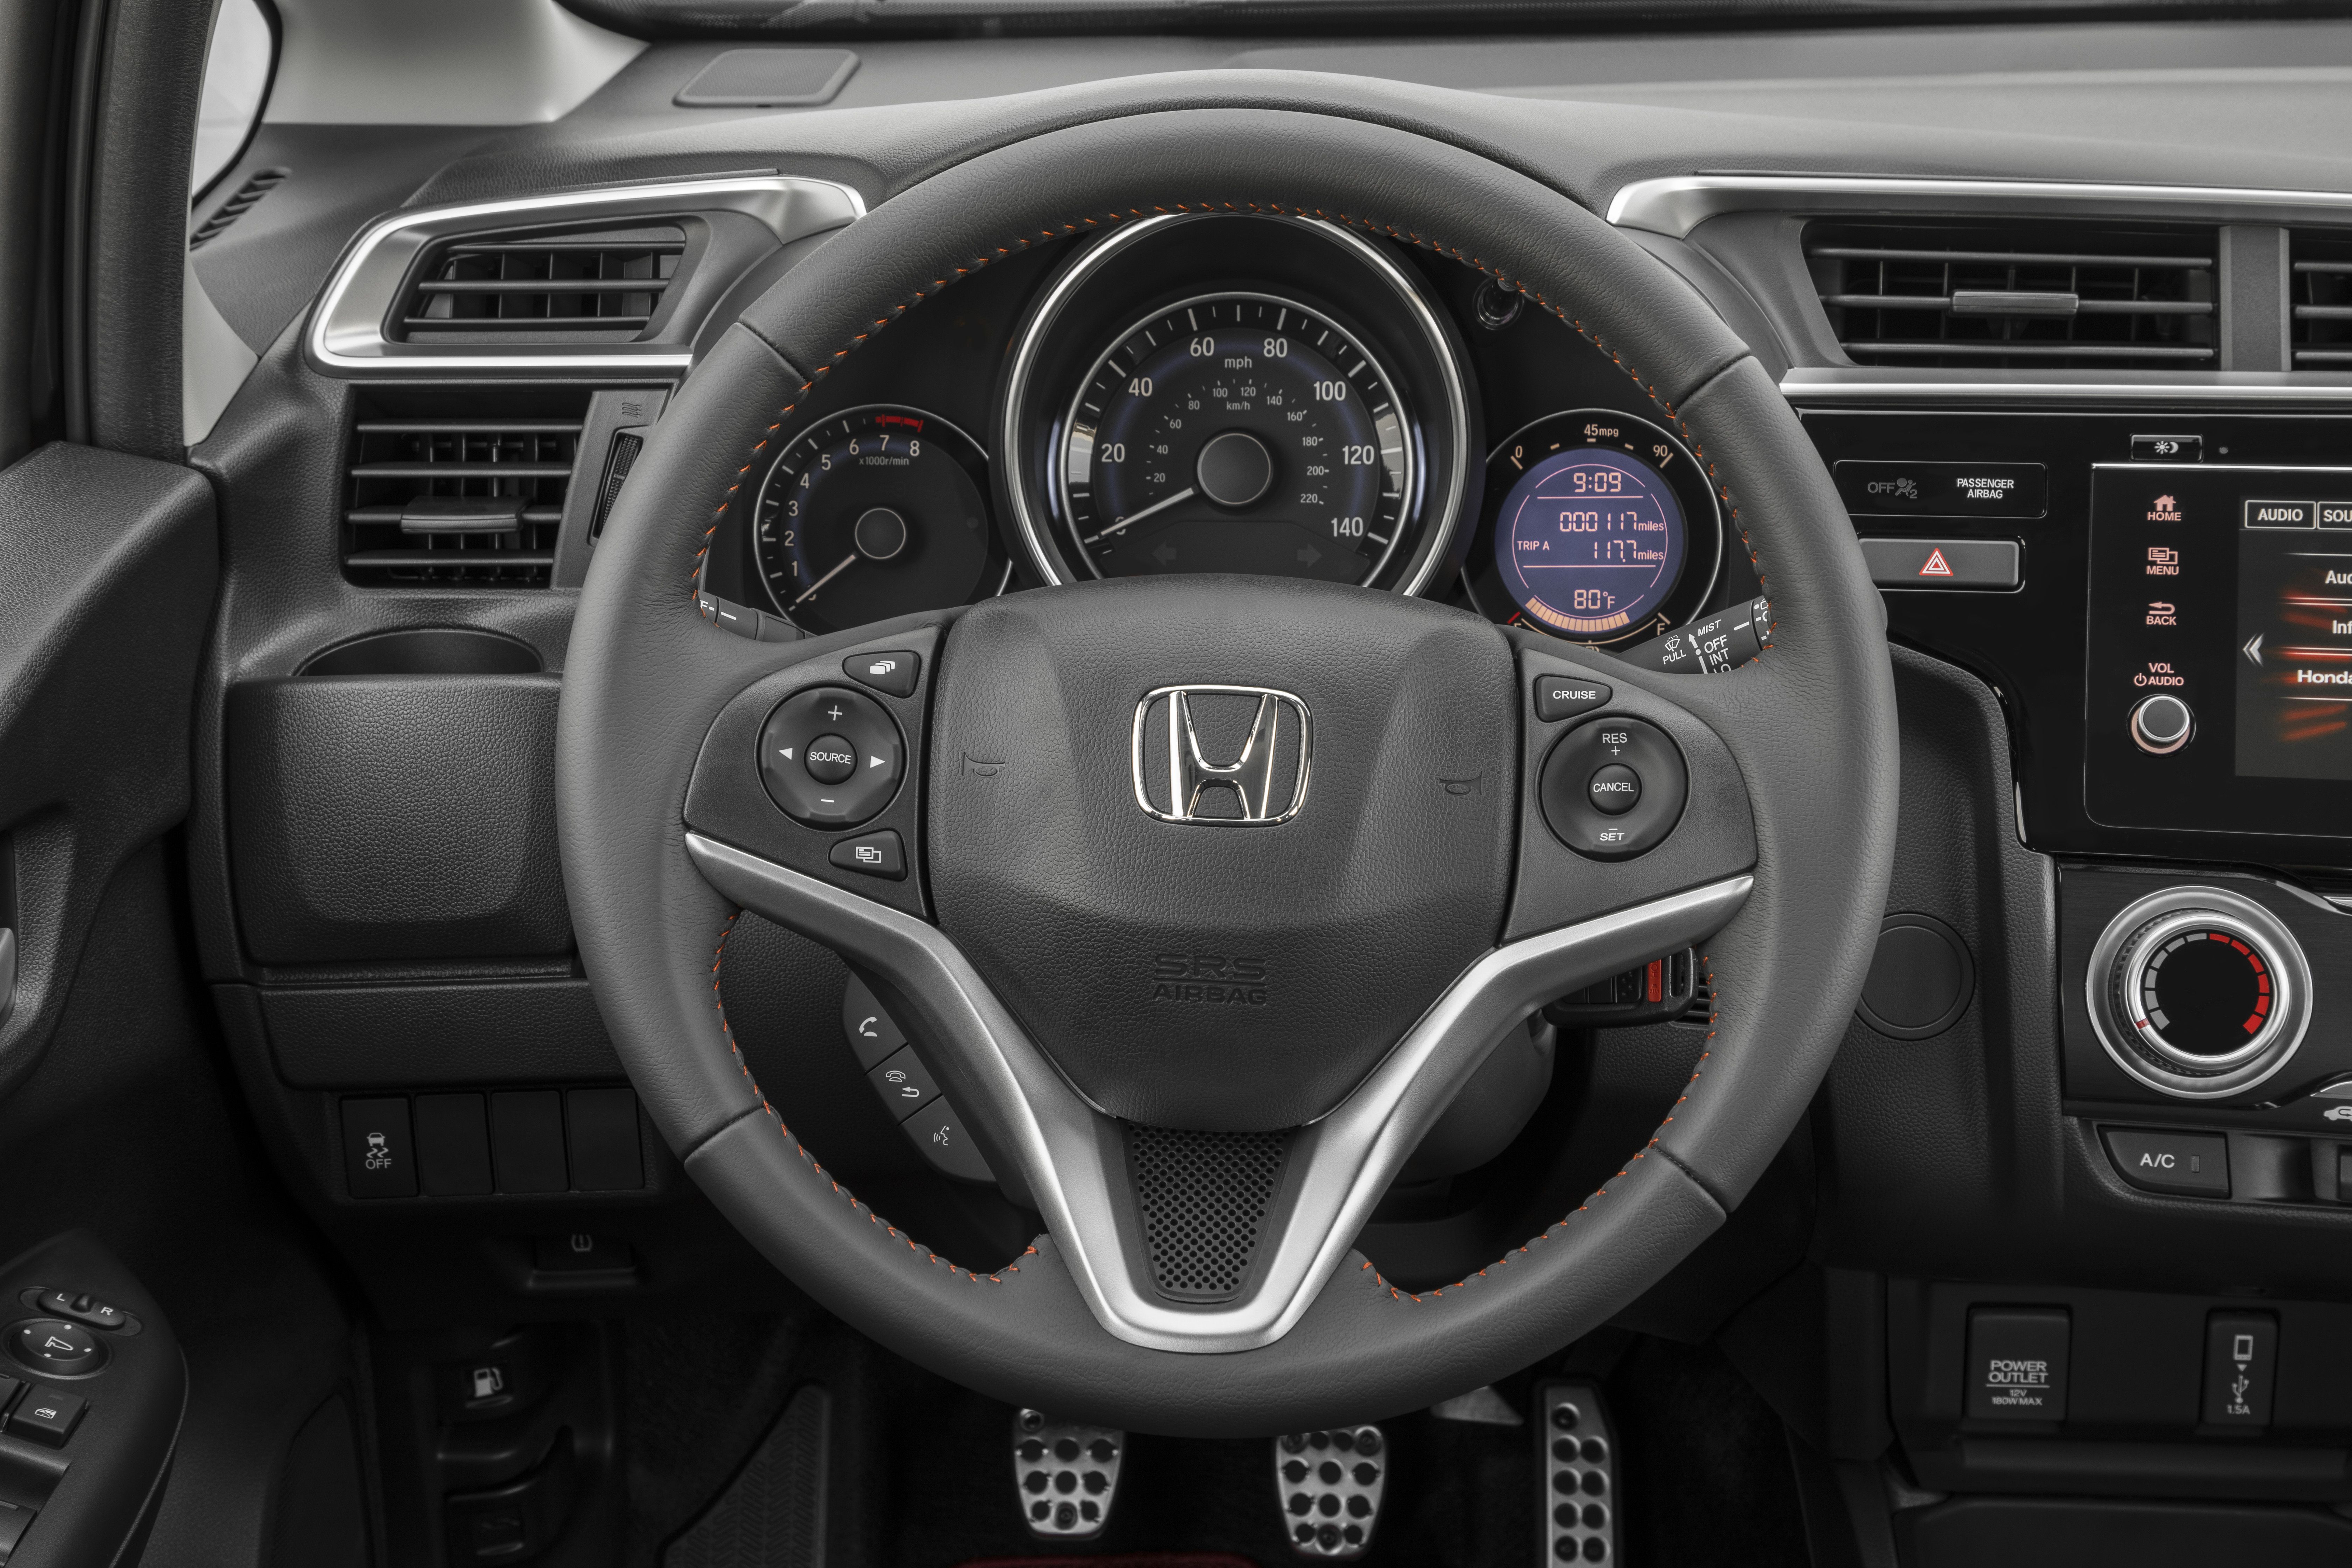 Compare 2020 Honda Fit Trim Levels - MS Honda Dealer